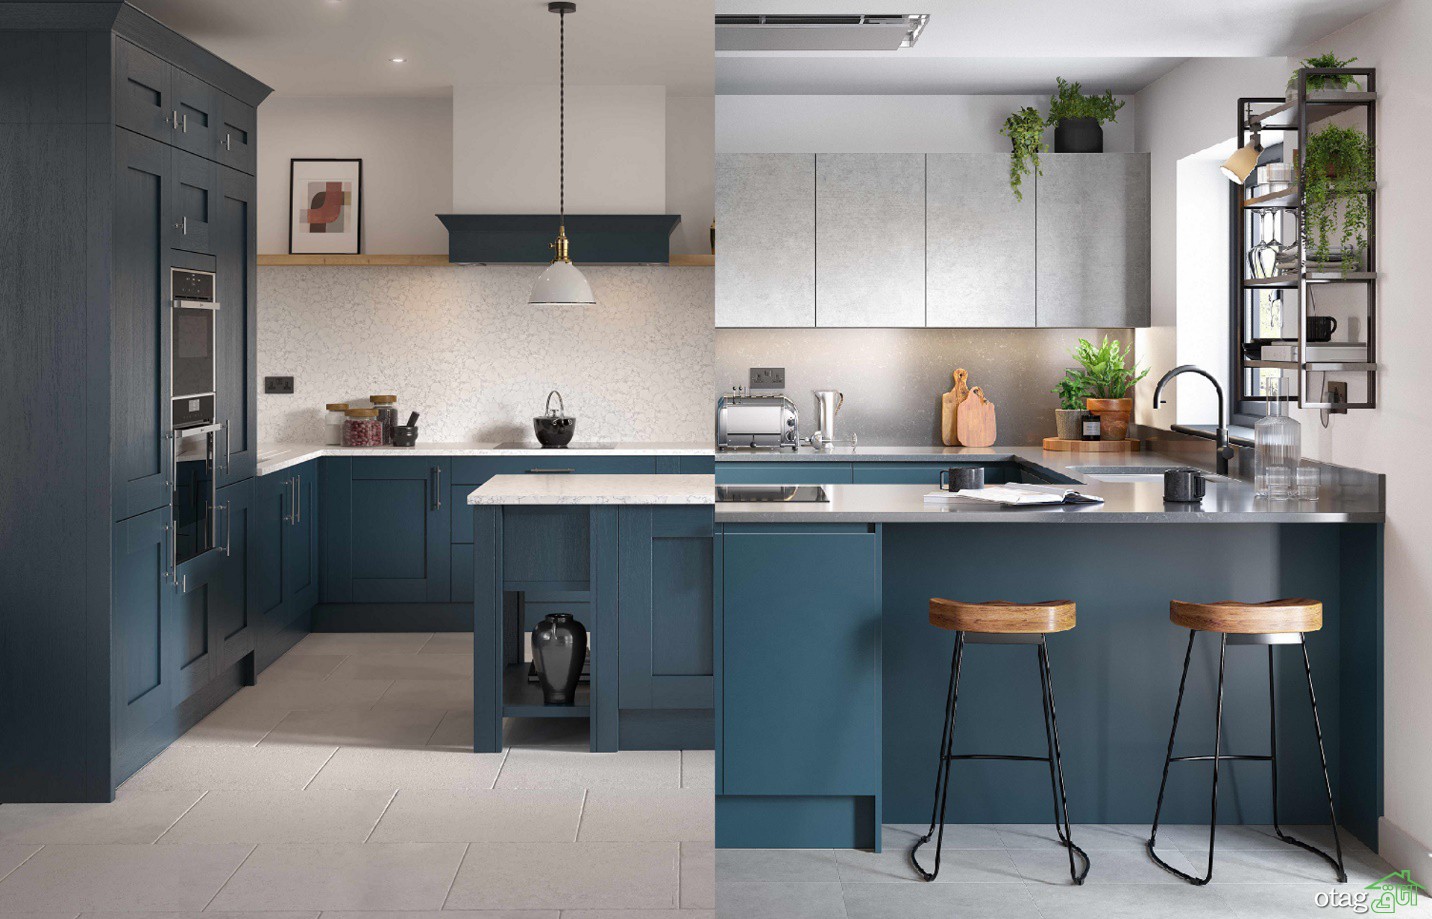 کدام سبک کابنیت مناسب آشپزخانه شماست؟ کلاسیک یا مدرن؟